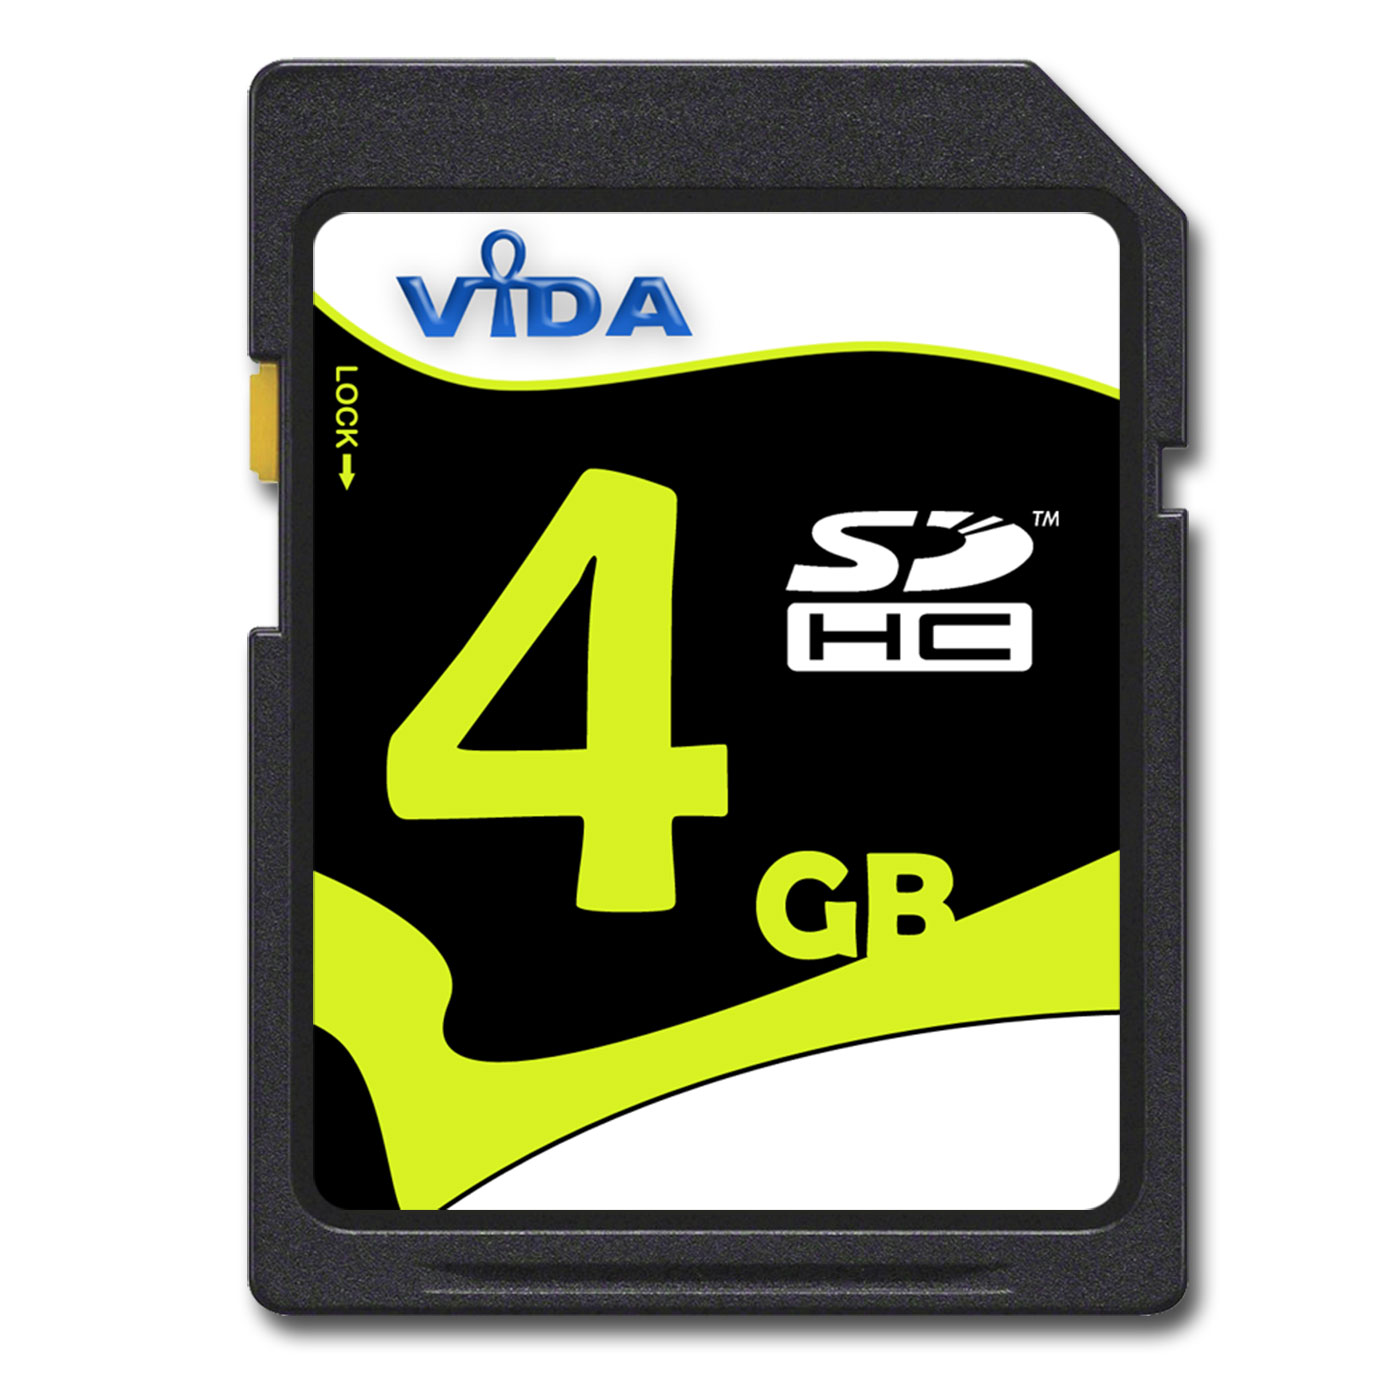 4GB SD/SDHC MEMORY CARD FOR Panasonic Lumix DMC-FS35